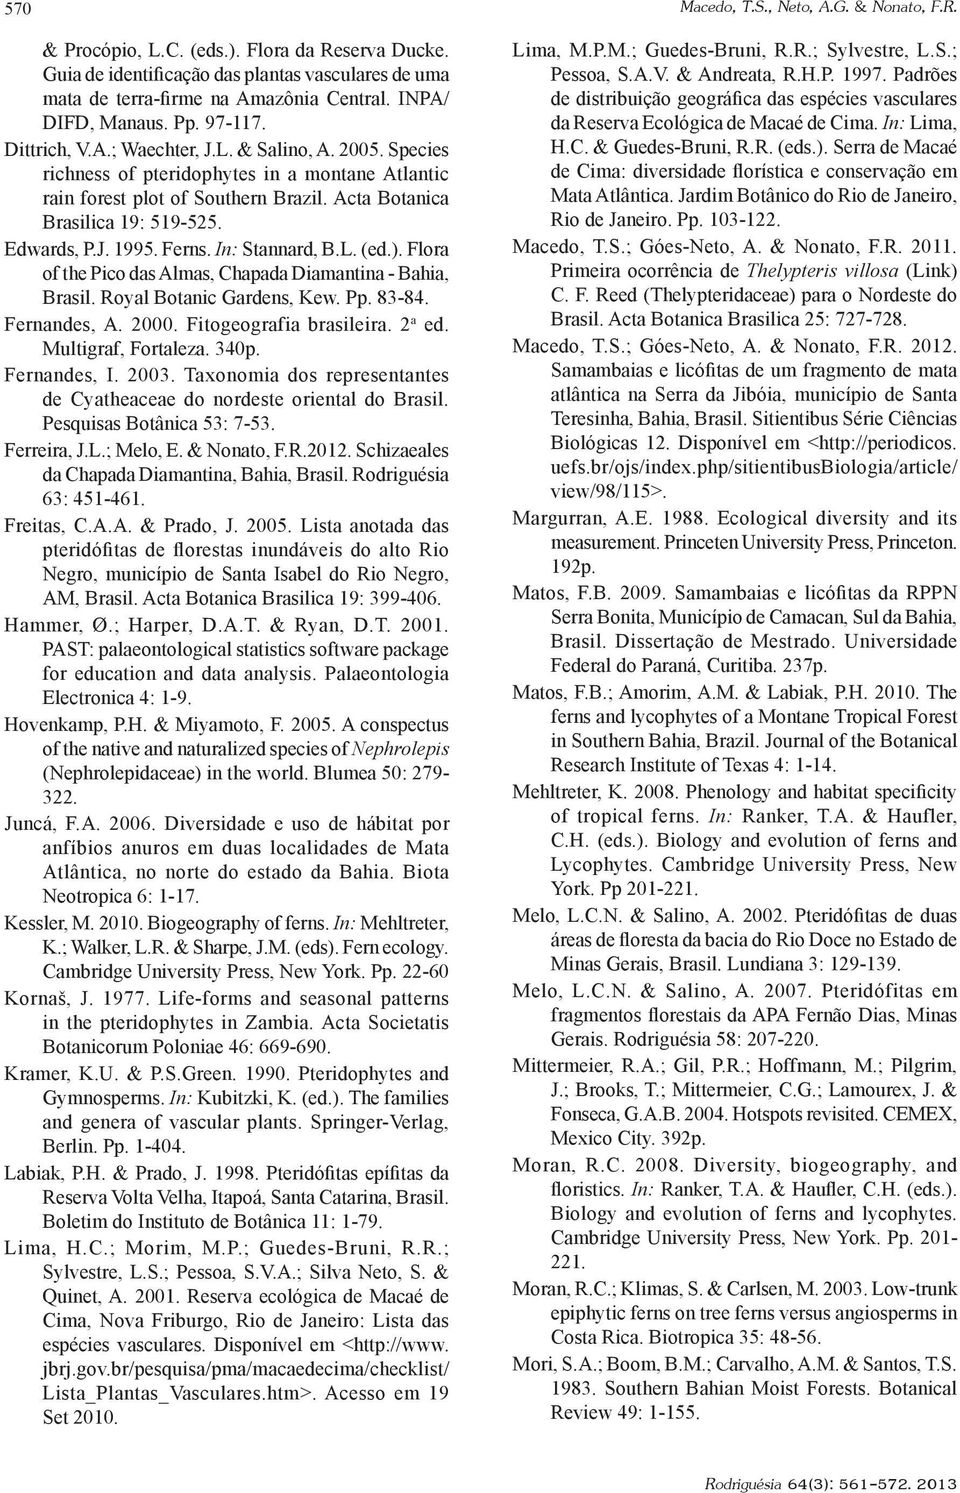 Acta Botanica Brasilica 19: 519-525. Edwards, P.J. 1995. Ferns. In: Stannard, B.L. (ed.). Flora of the Pico das Almas, Chapada Diamantina - Bahia, Brasil. Royal Botanic Gardens, Kew. Pp. 83-84.